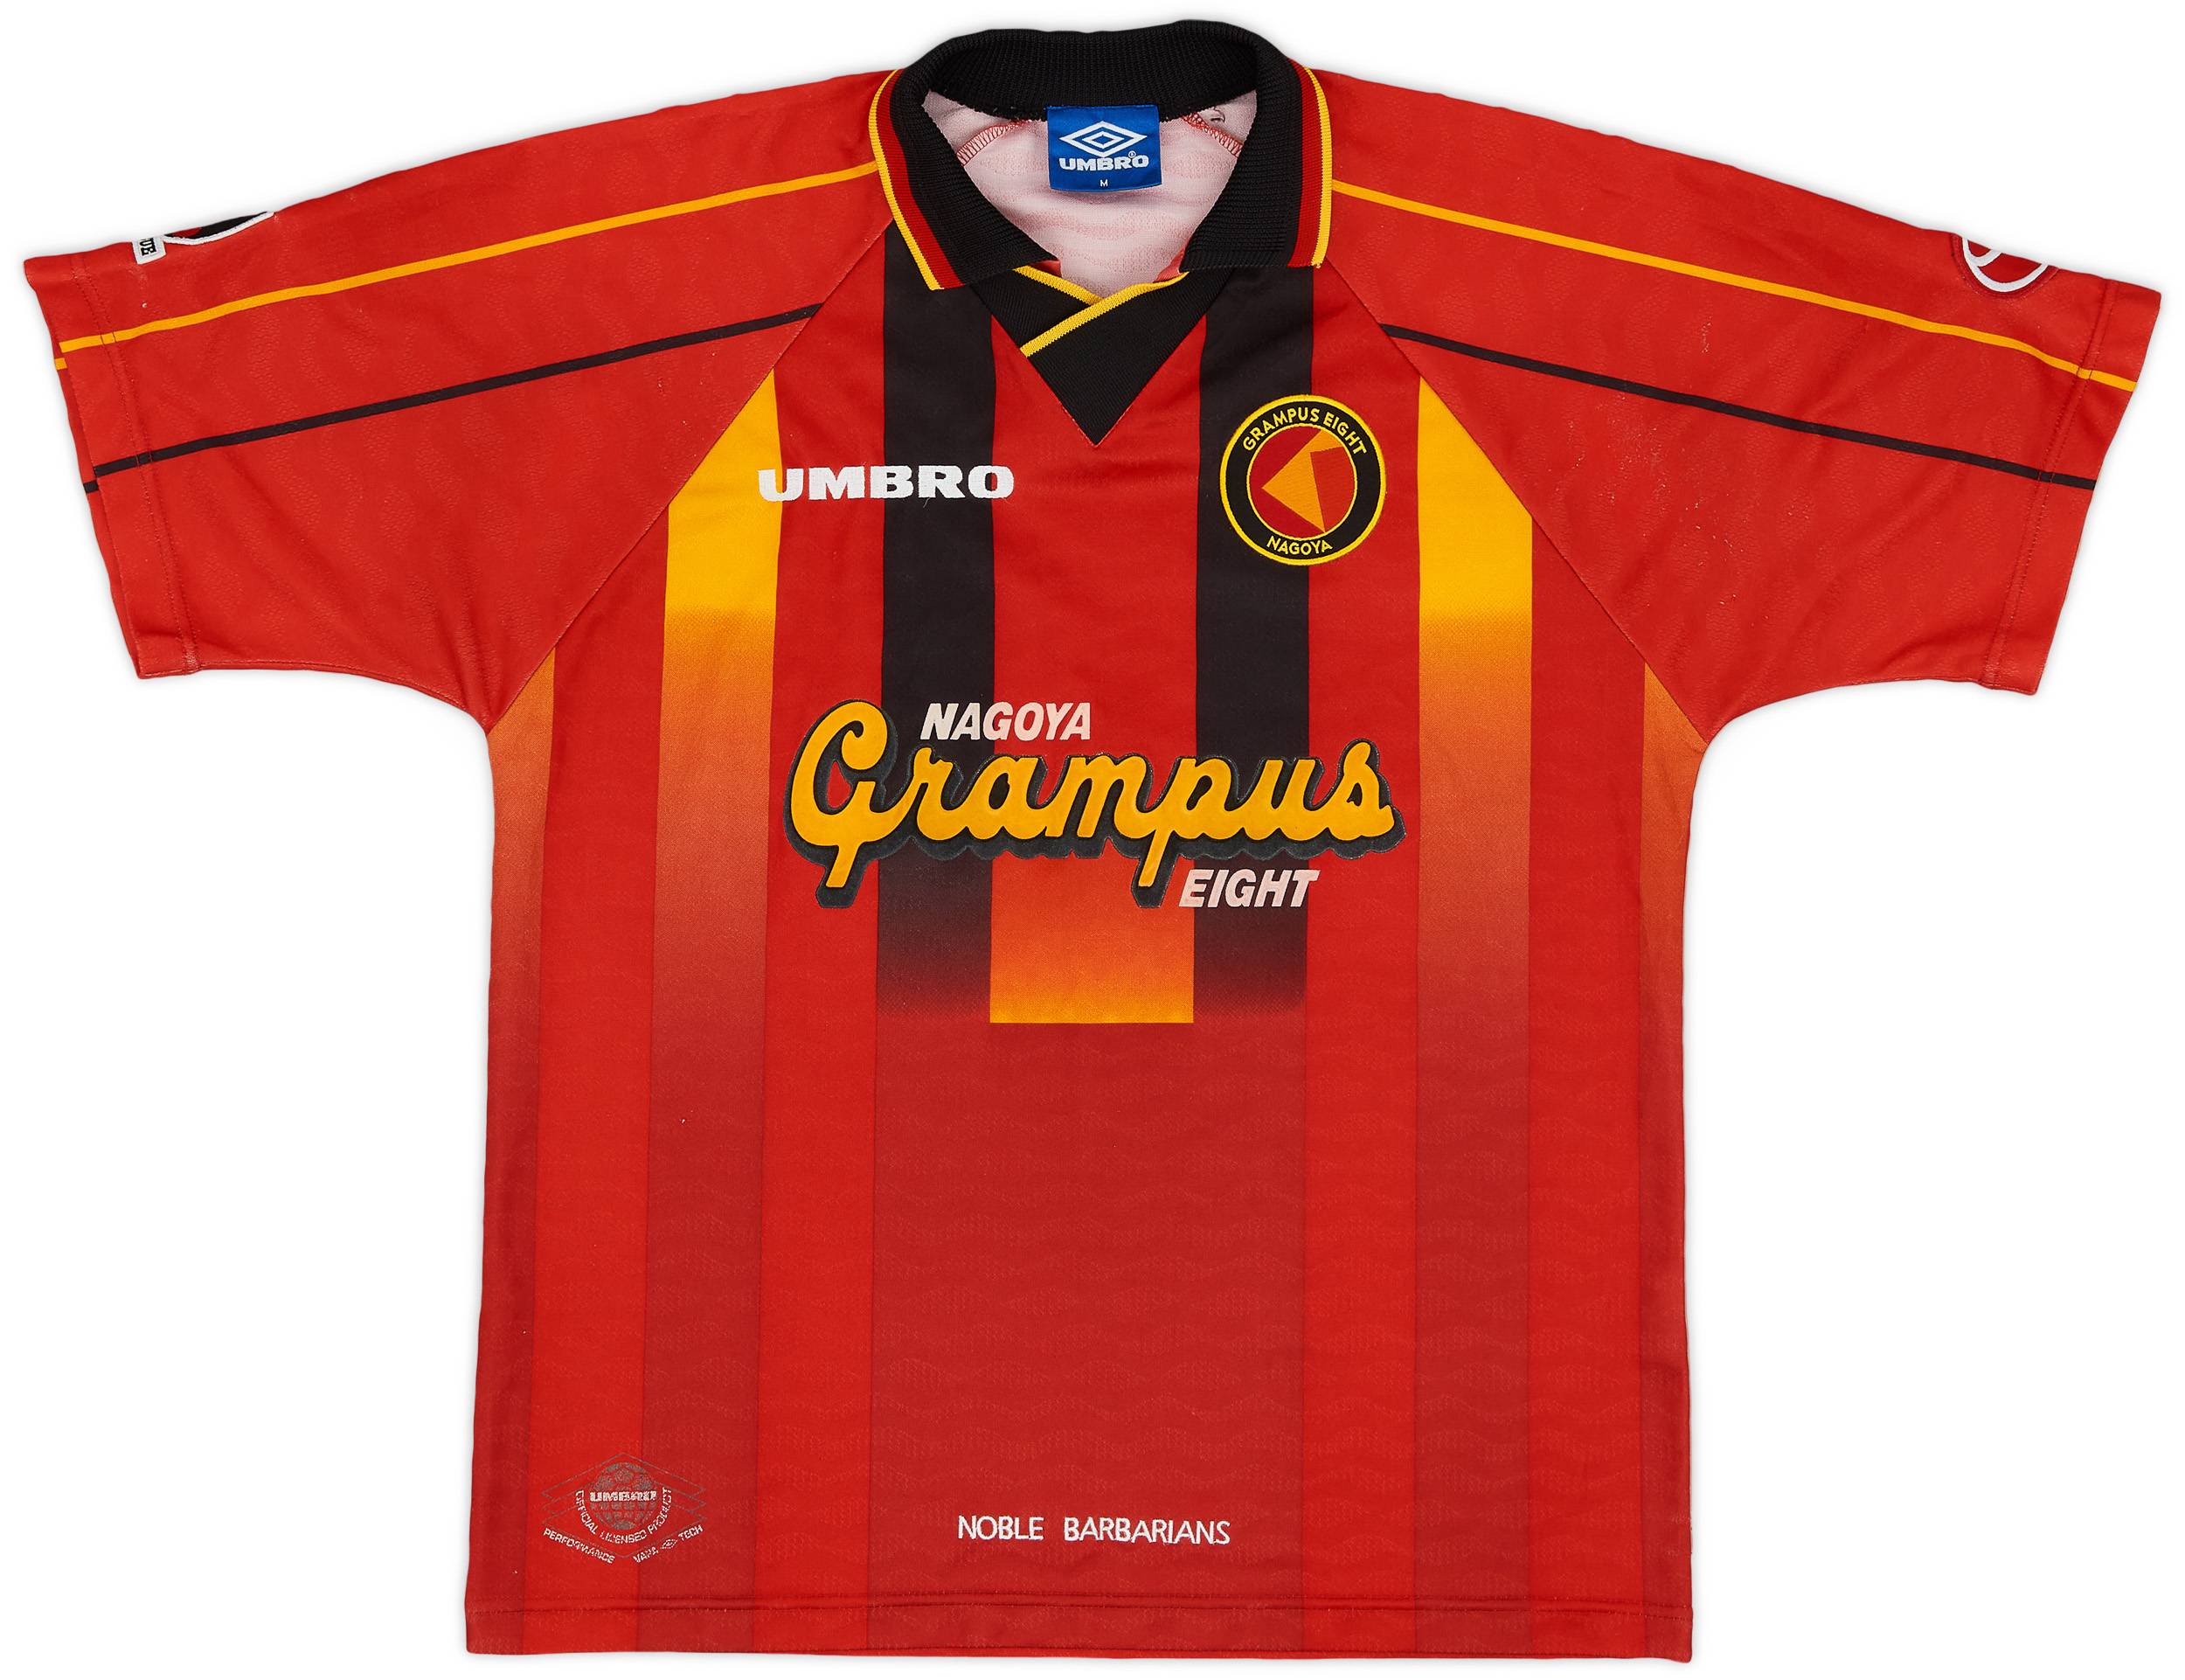 1996-98 Nagoya Grampus Eight Home Shirt - 8/10 - (M)